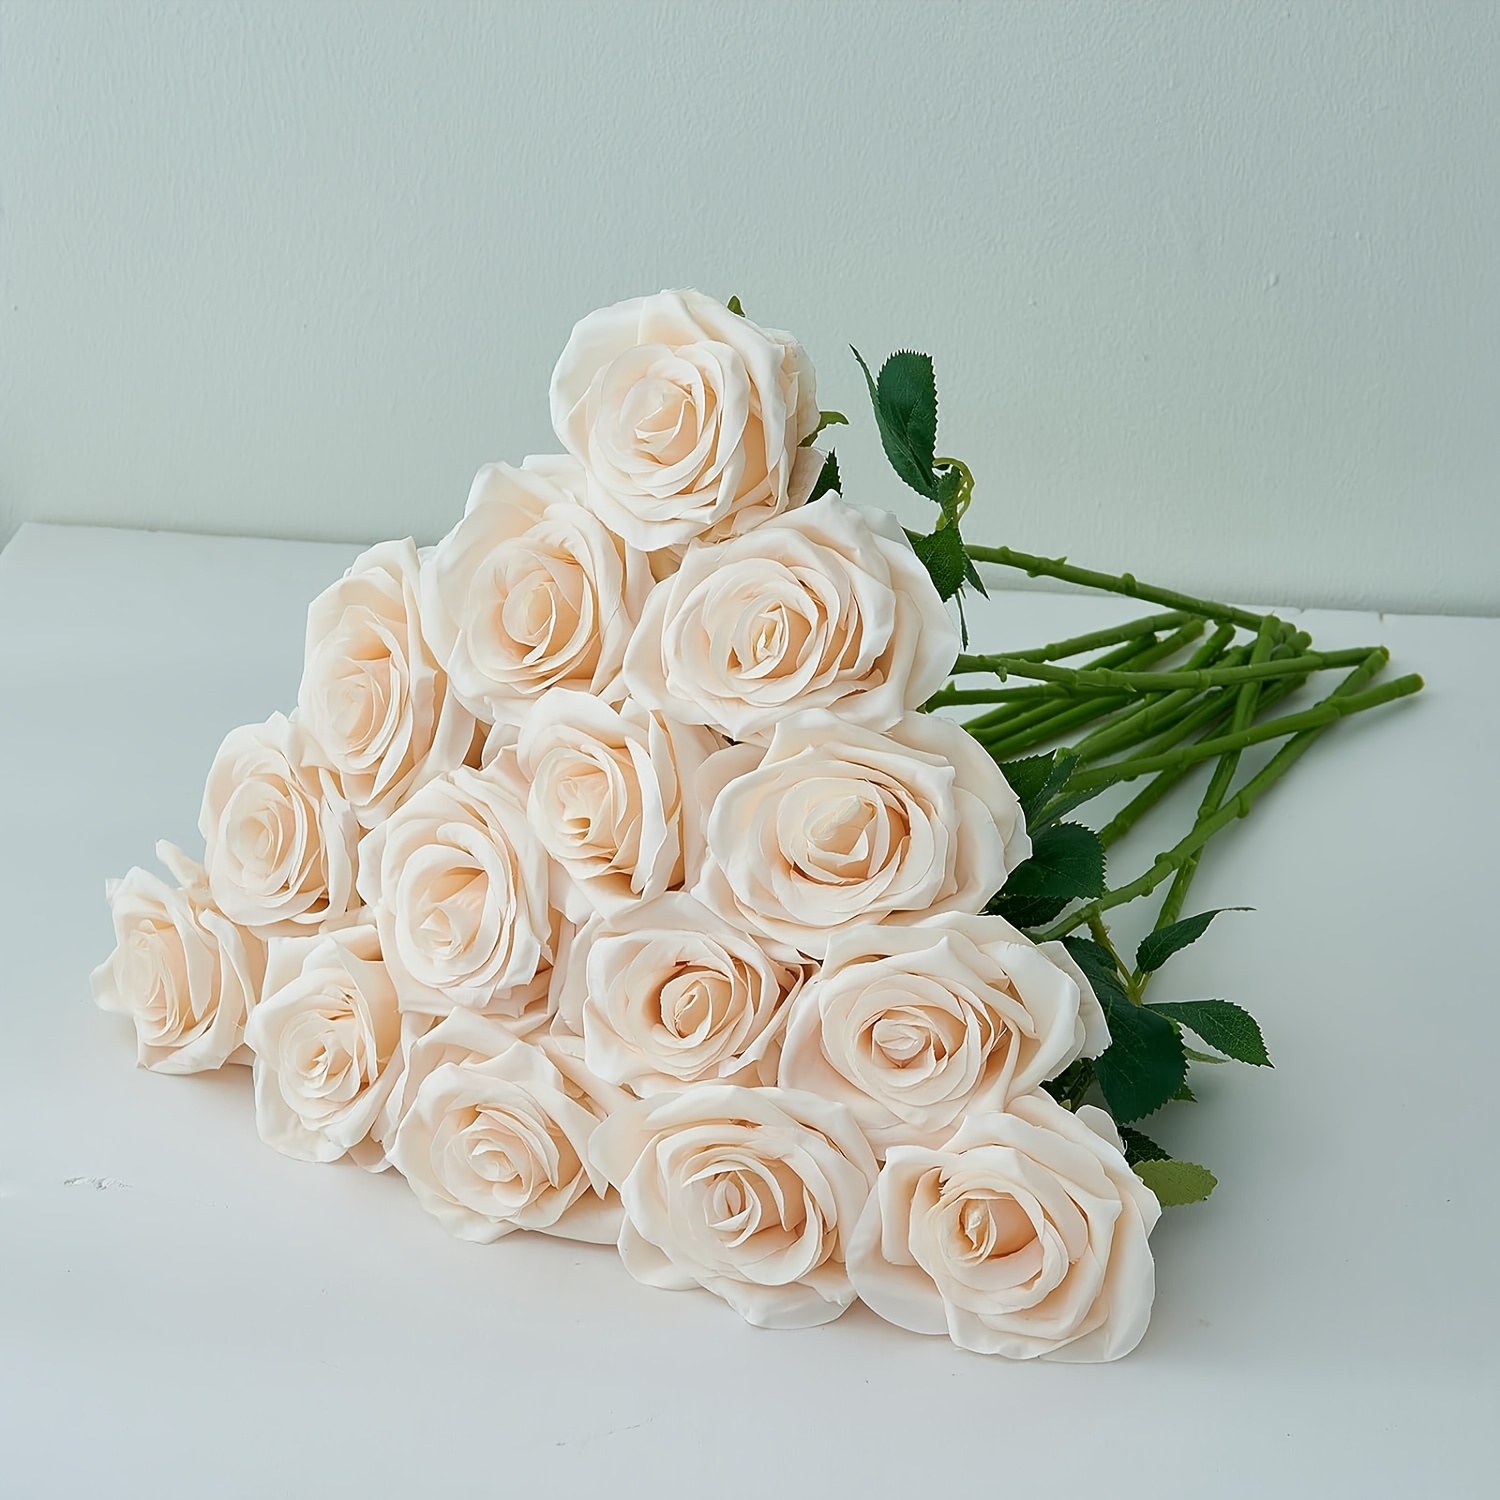 

10pcs Artificial Champagne Flowers Roses Long Stems Fake Flowers, Decorative Bridal Wedding Bouquet For Home Garden Party Decor